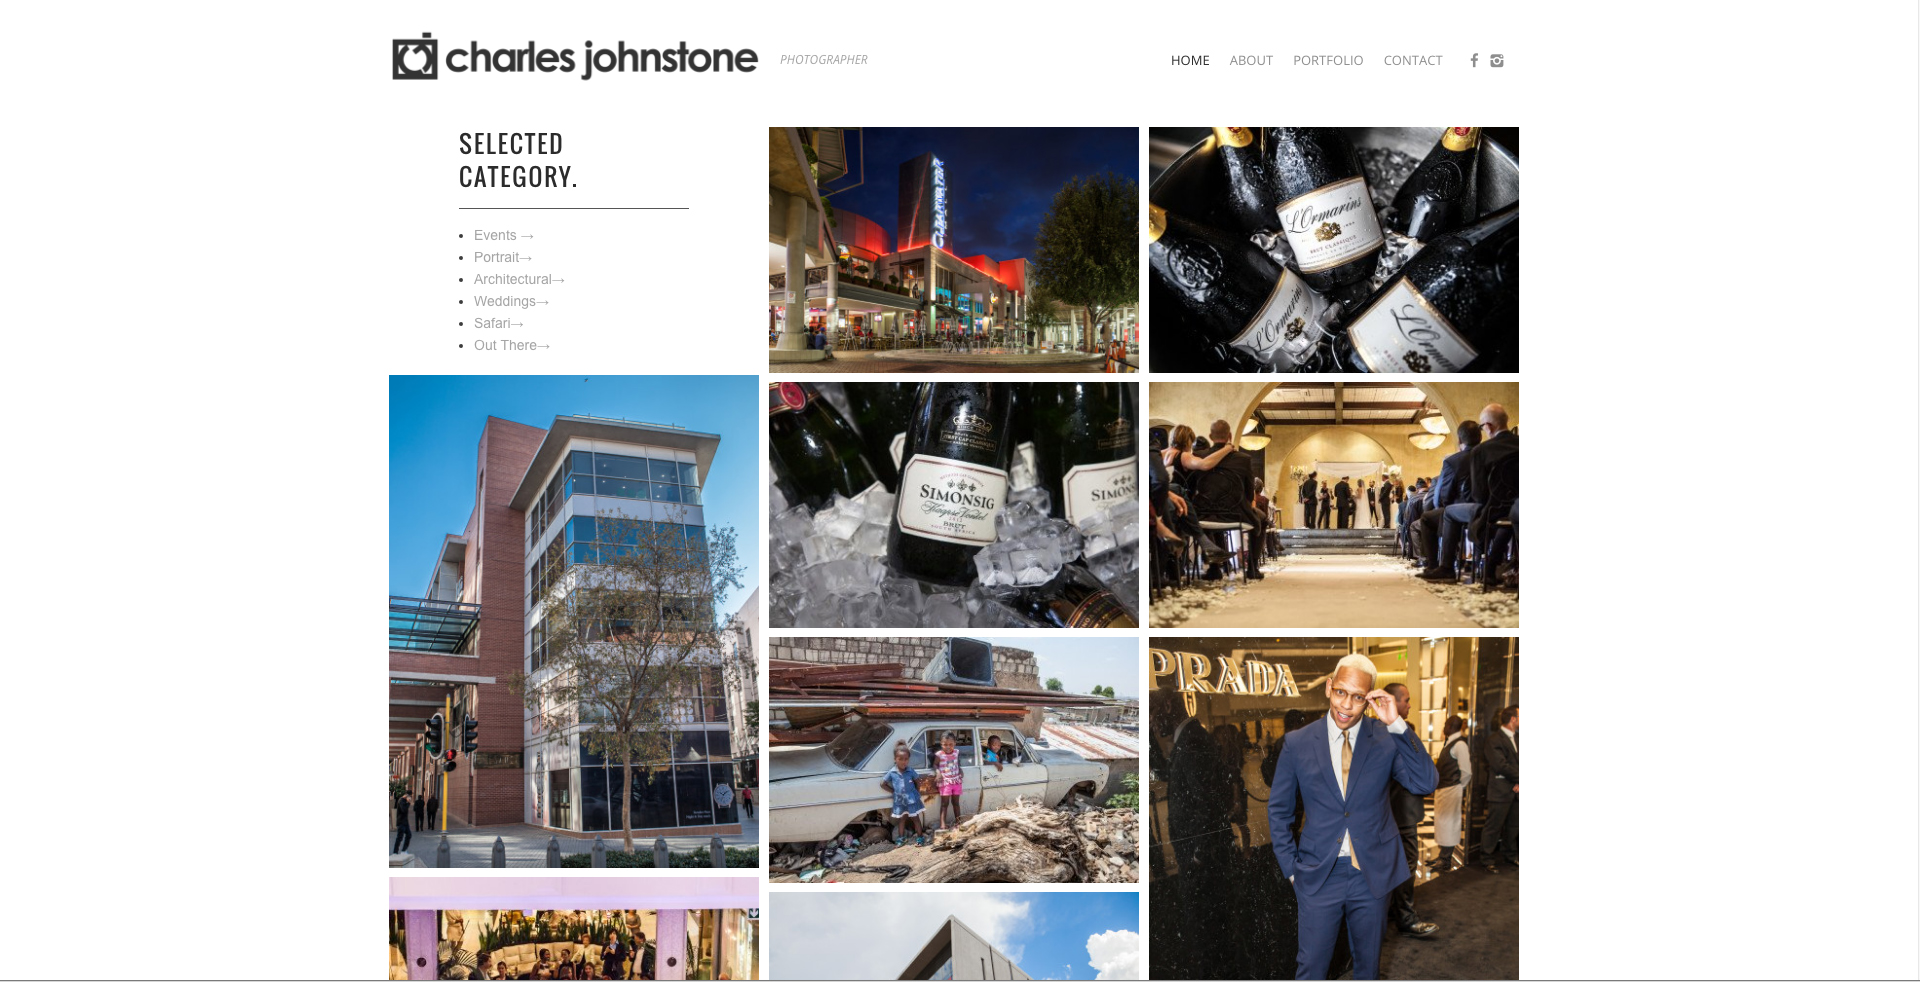 Charles Johnstone Photography webiste